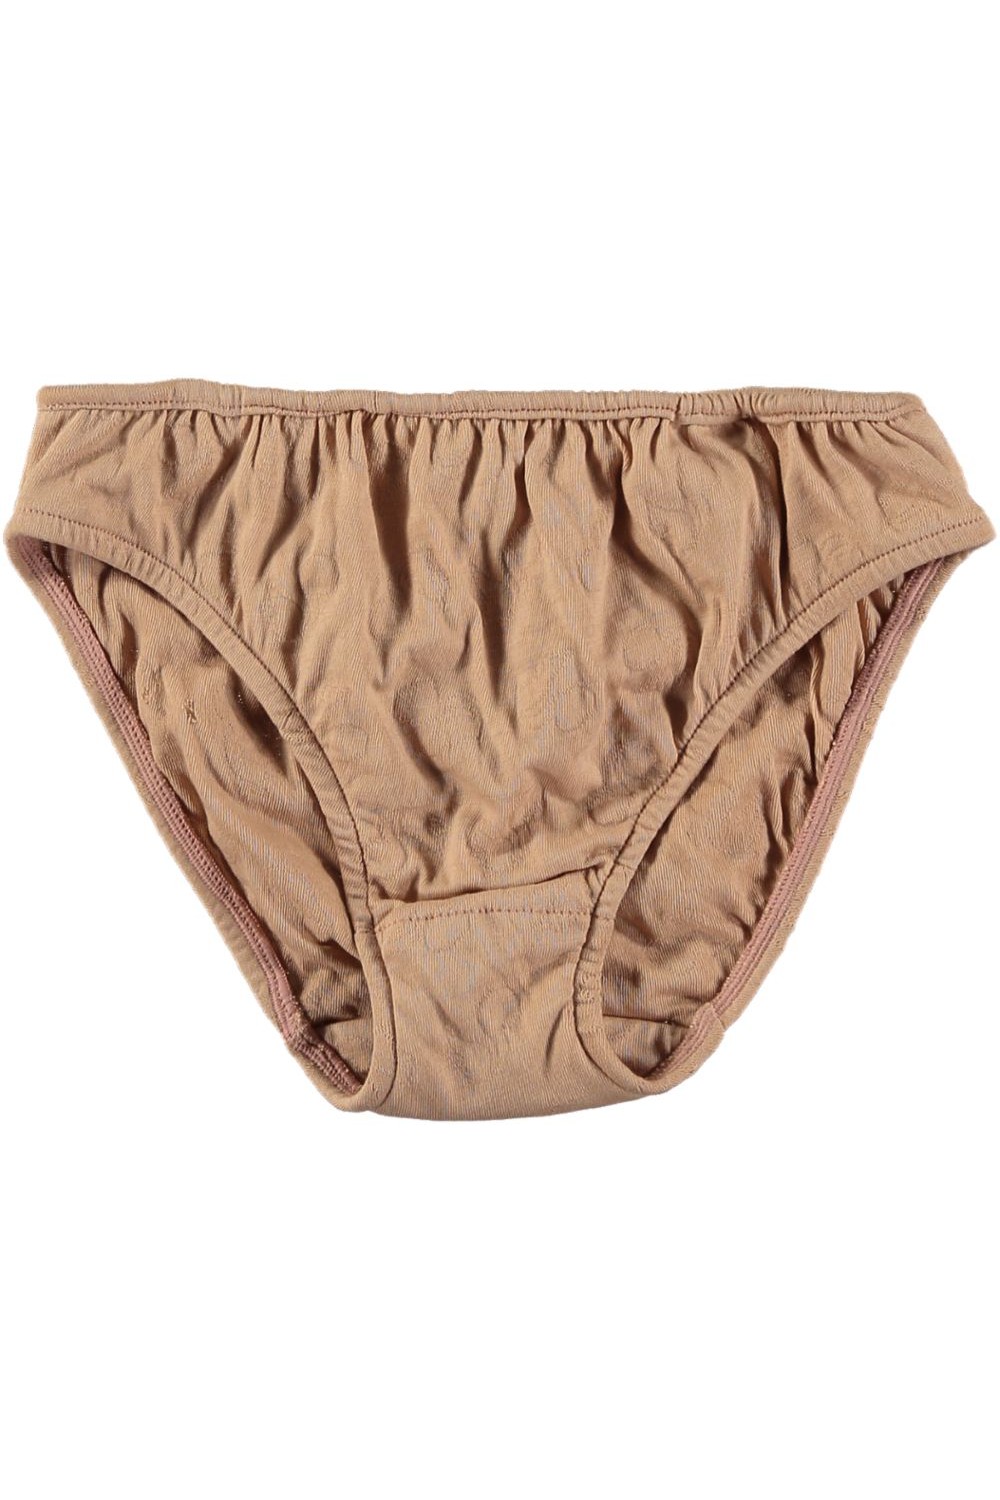 Parfaite girl's panties made of organic cotton, beige